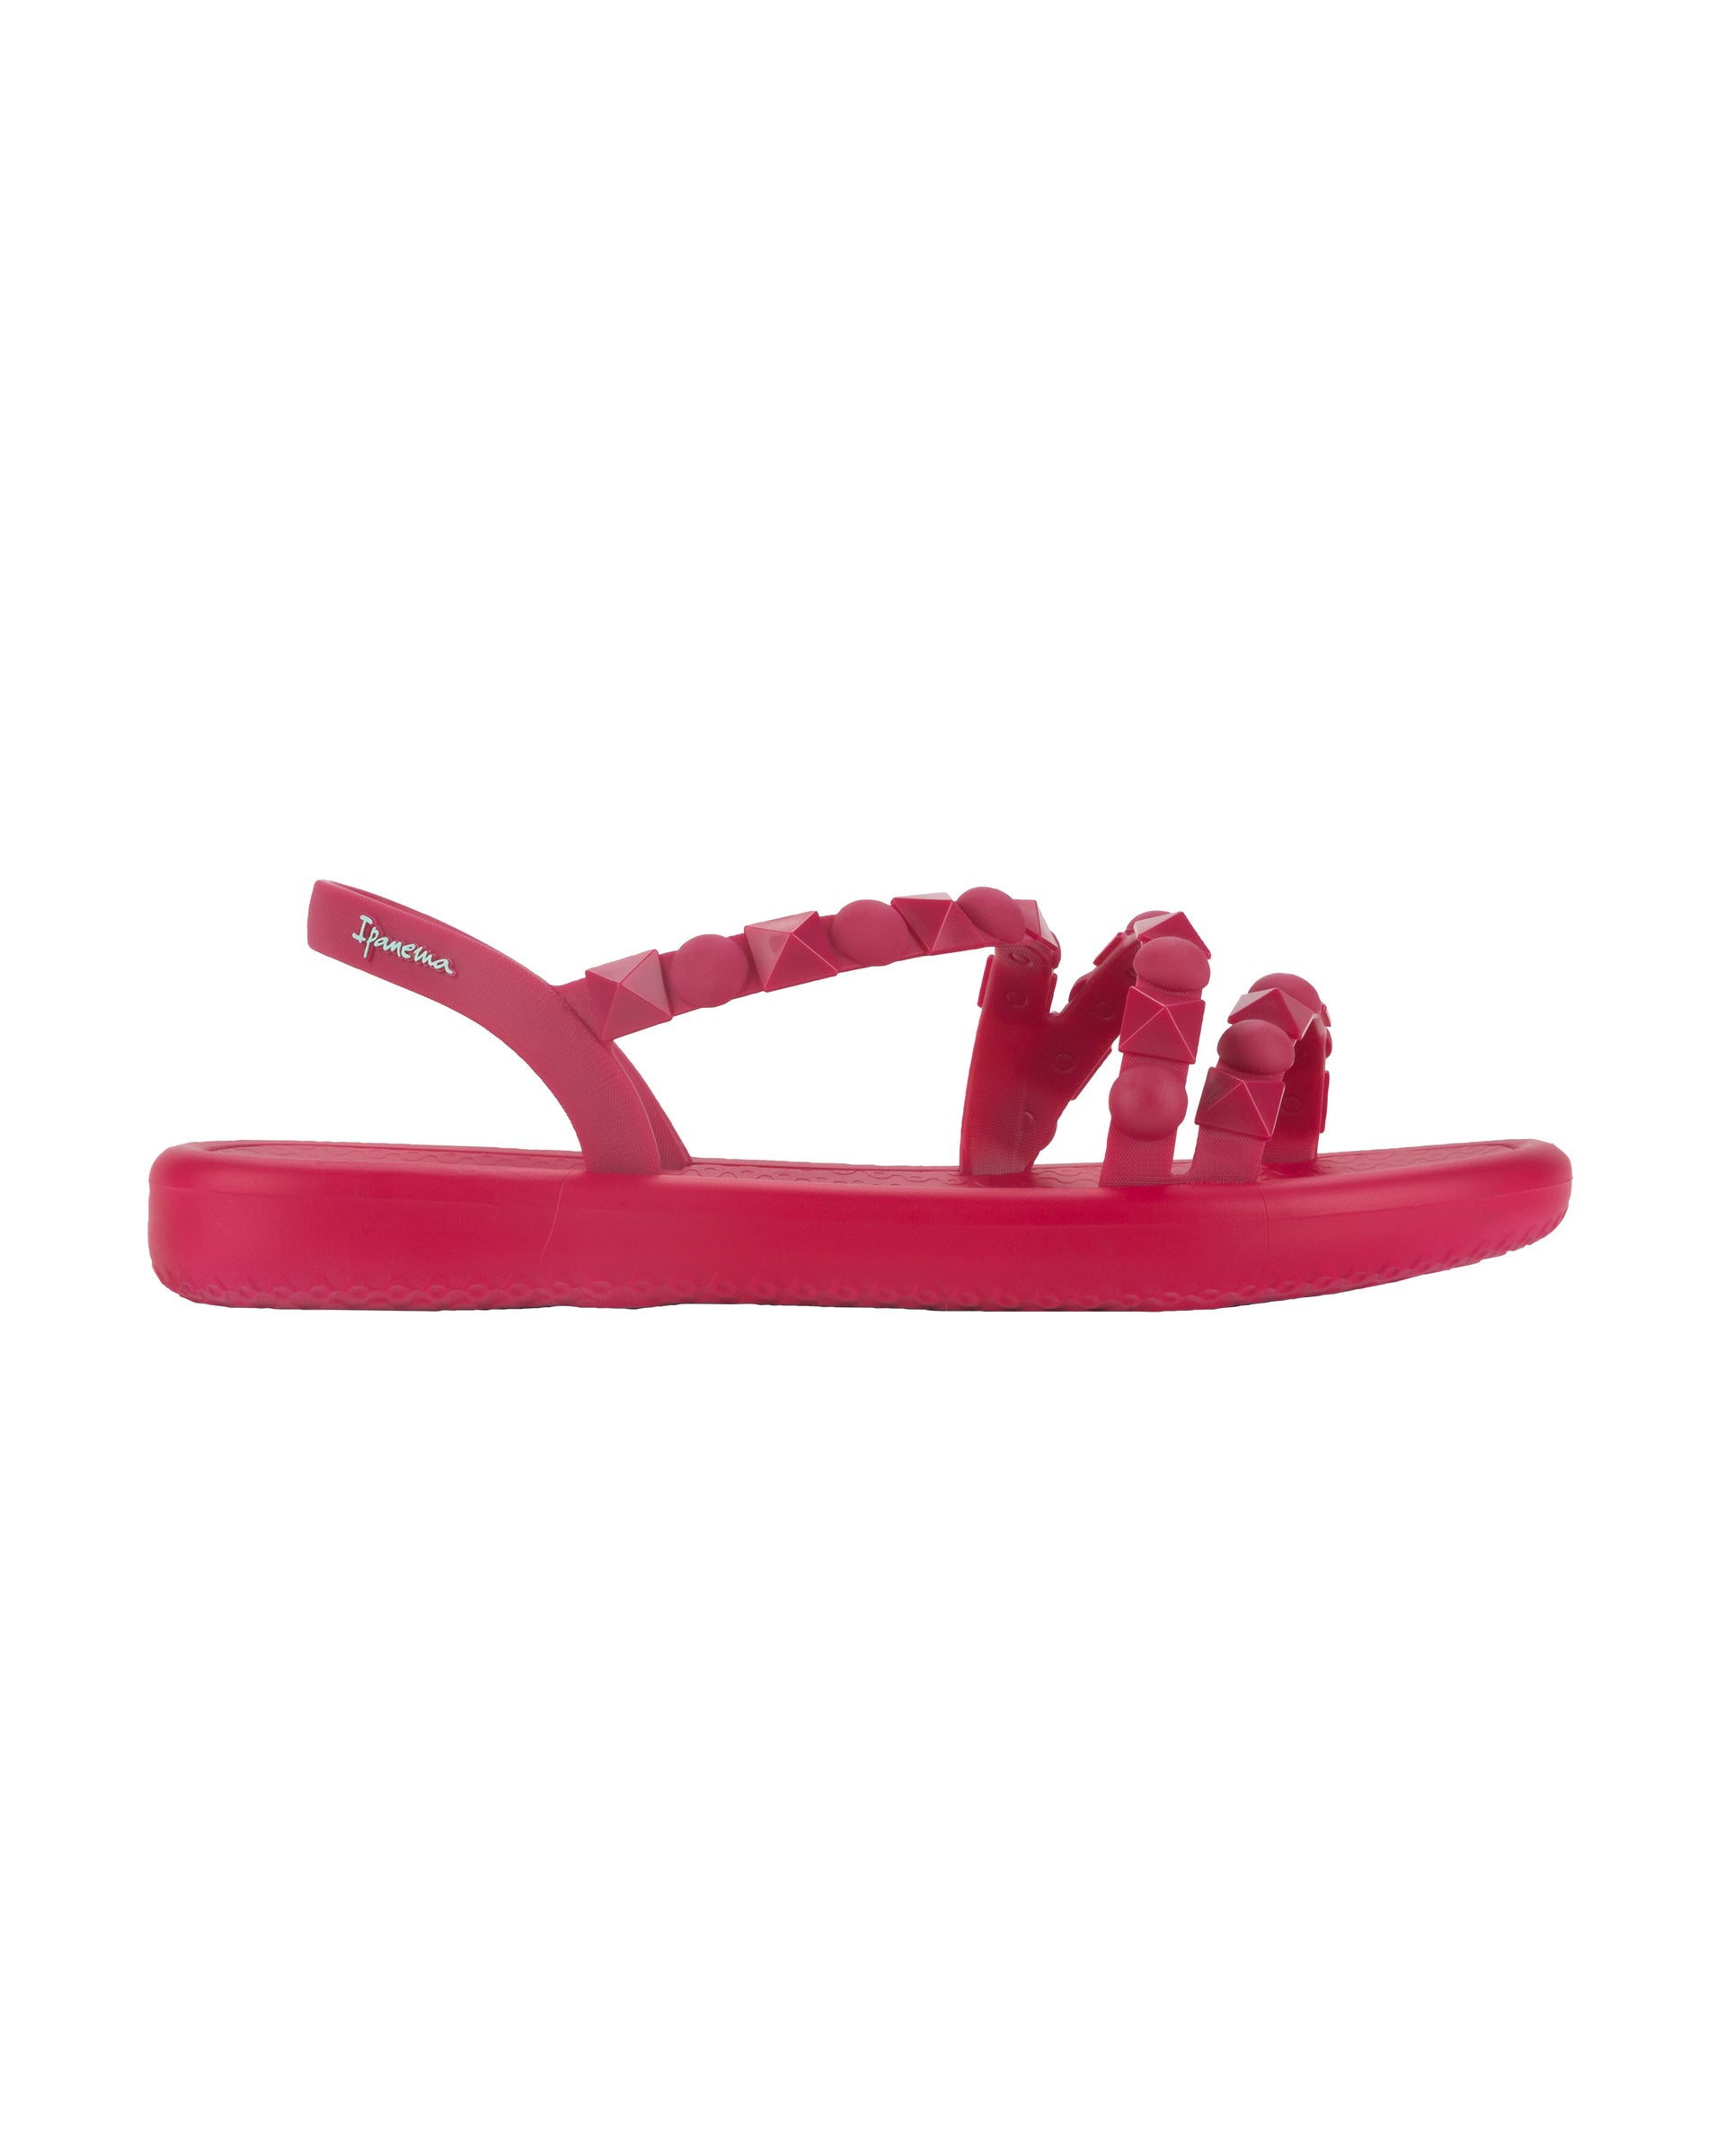 Side view of a dark pink woman's Ipanema Meu Sol flatform sandal.